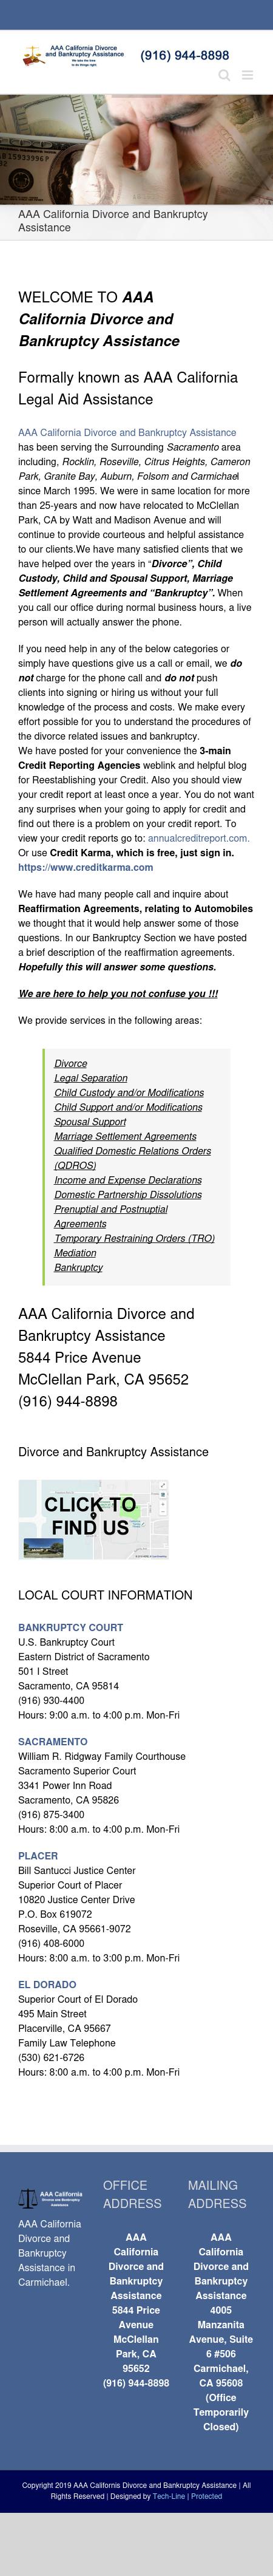 AAA California Legal Aid Assistance - Carmichael CA Lawyers